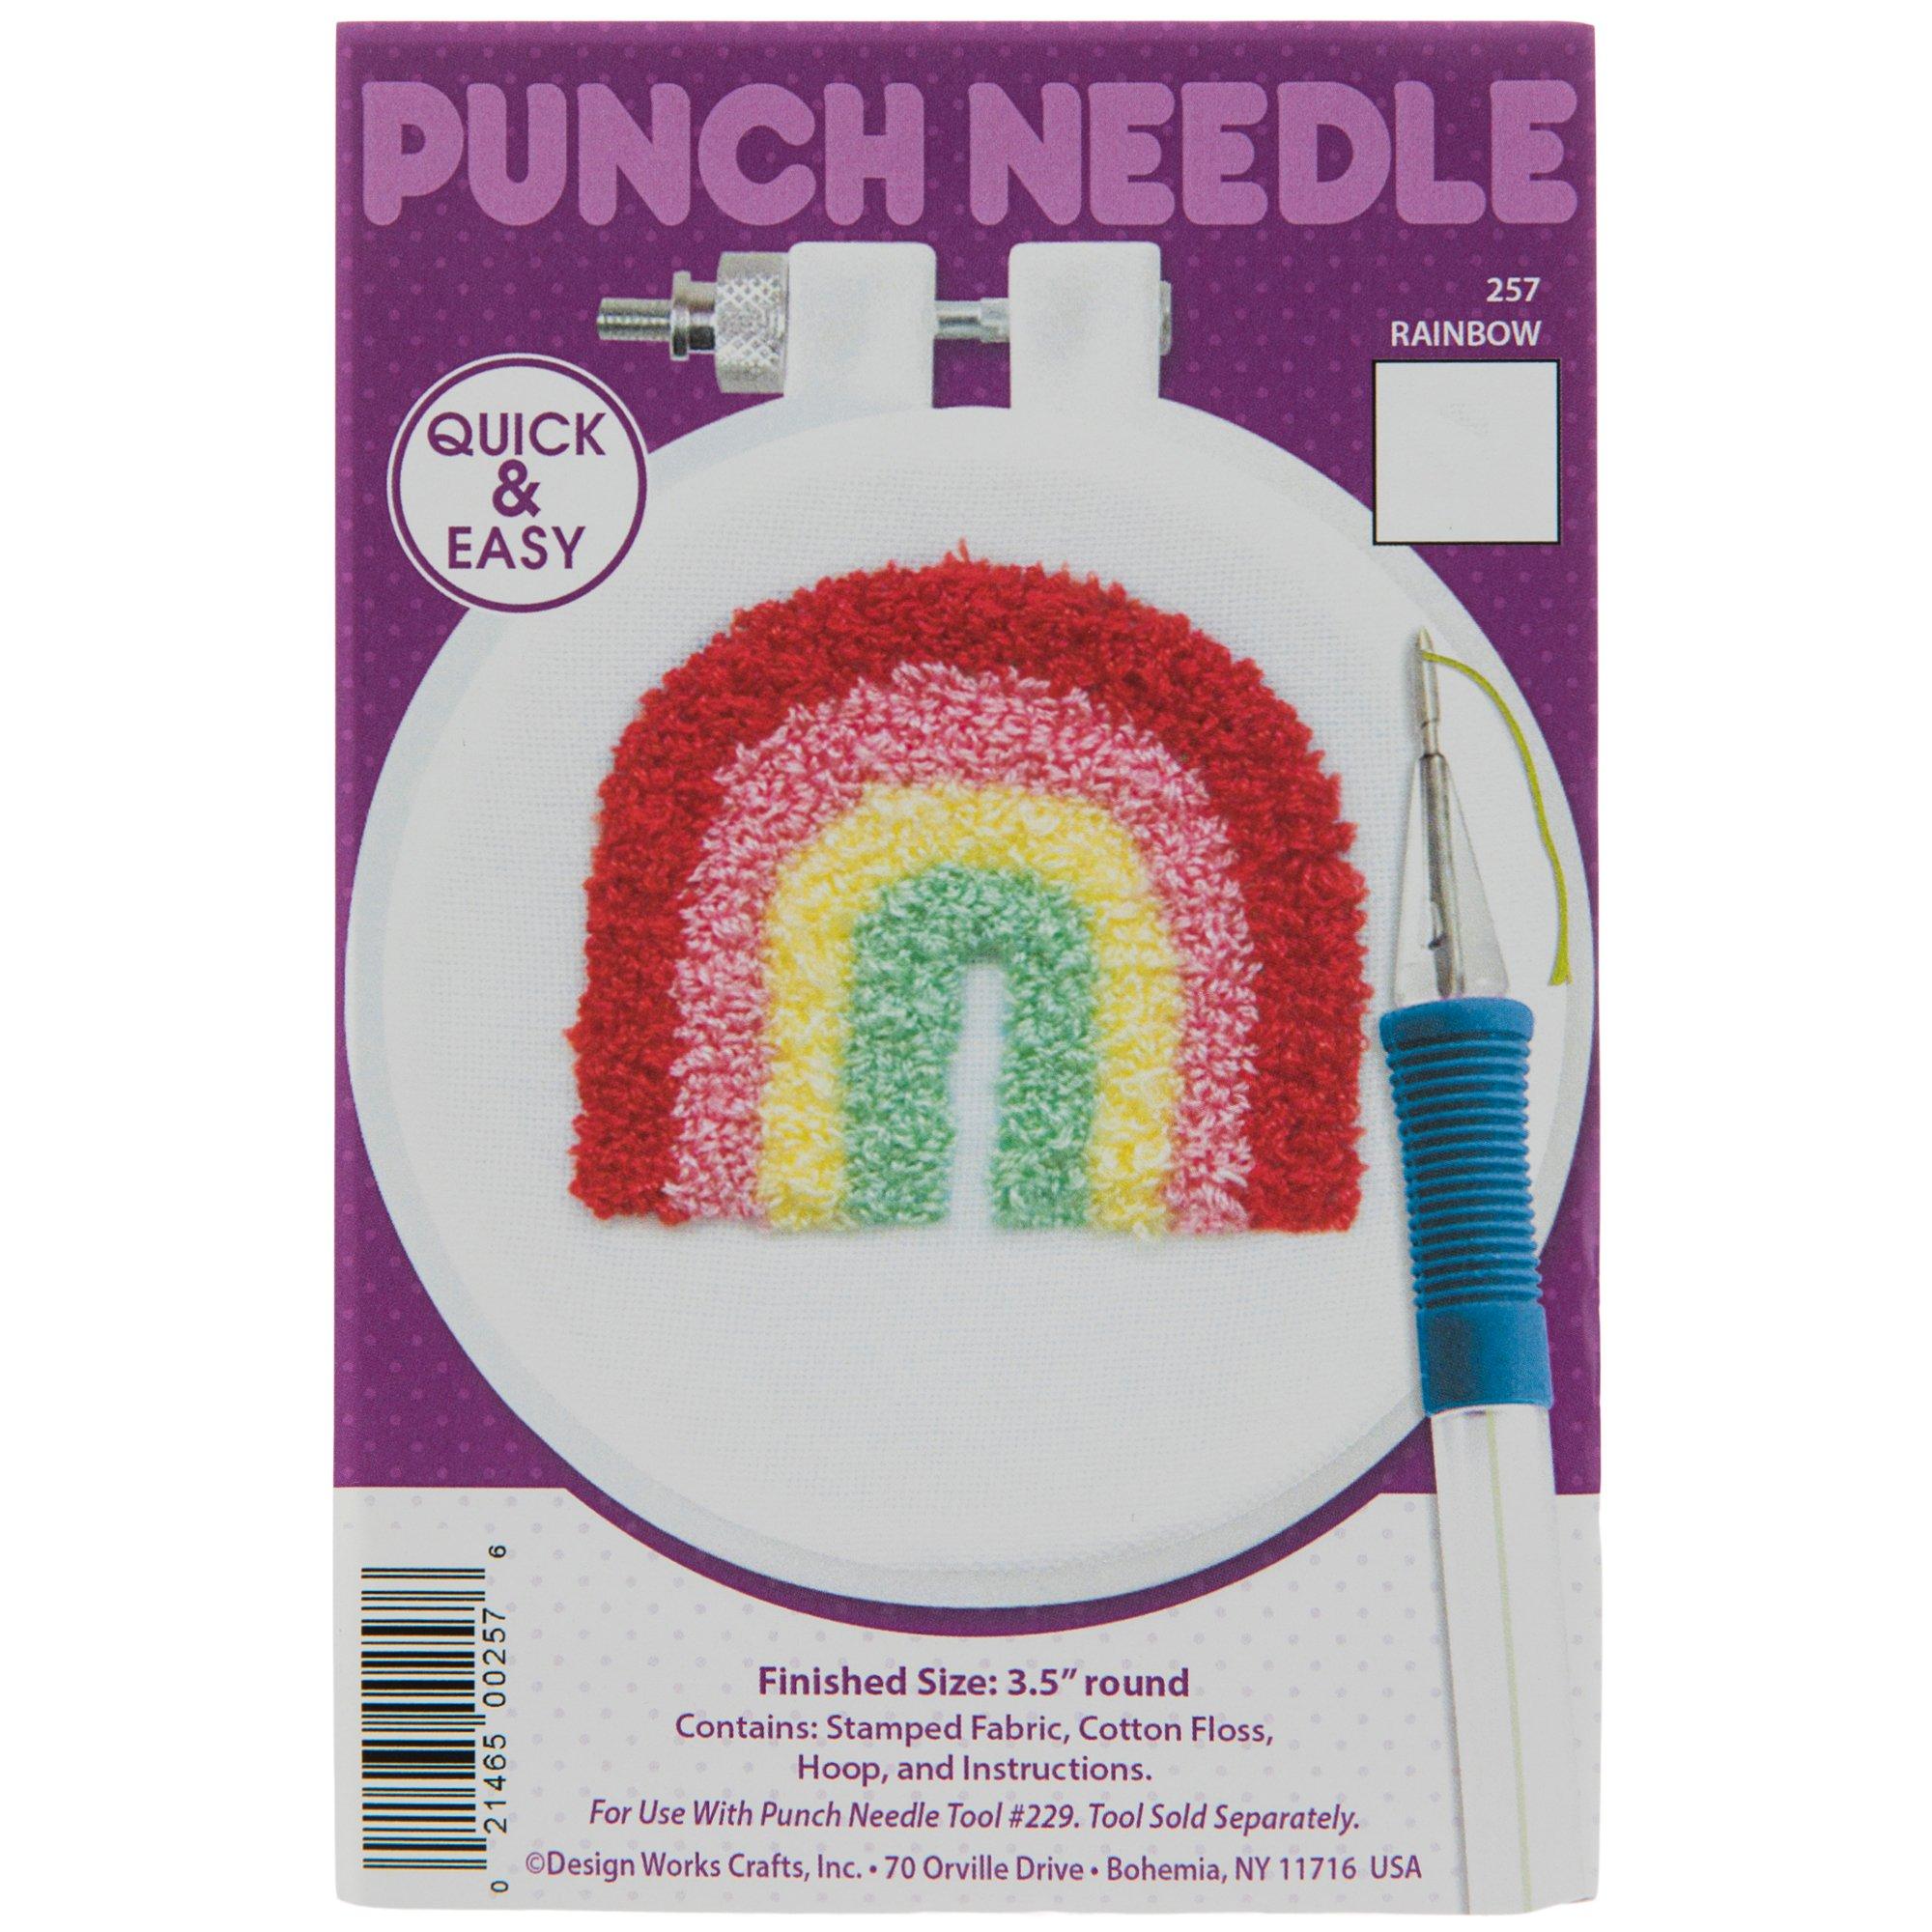 Dimensions Punch Needle Kit Rainbow